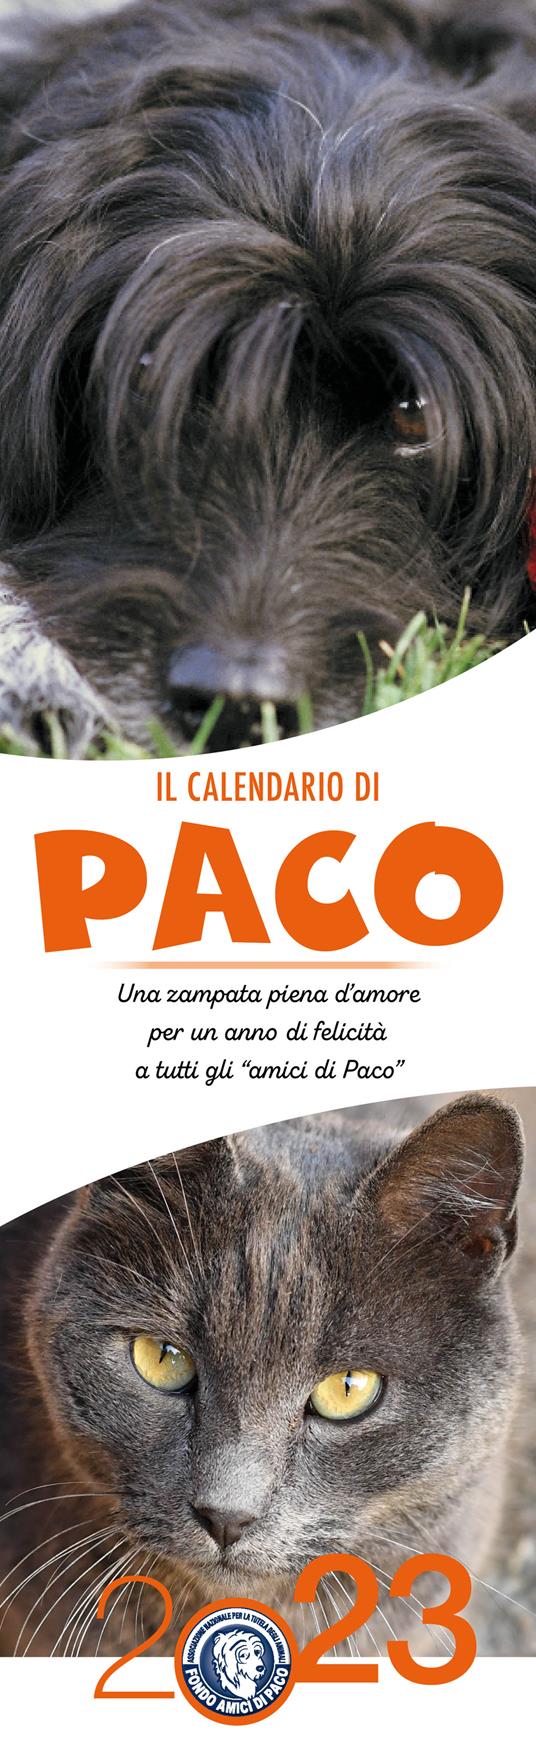 Calendario di Paco 2023 - copertina